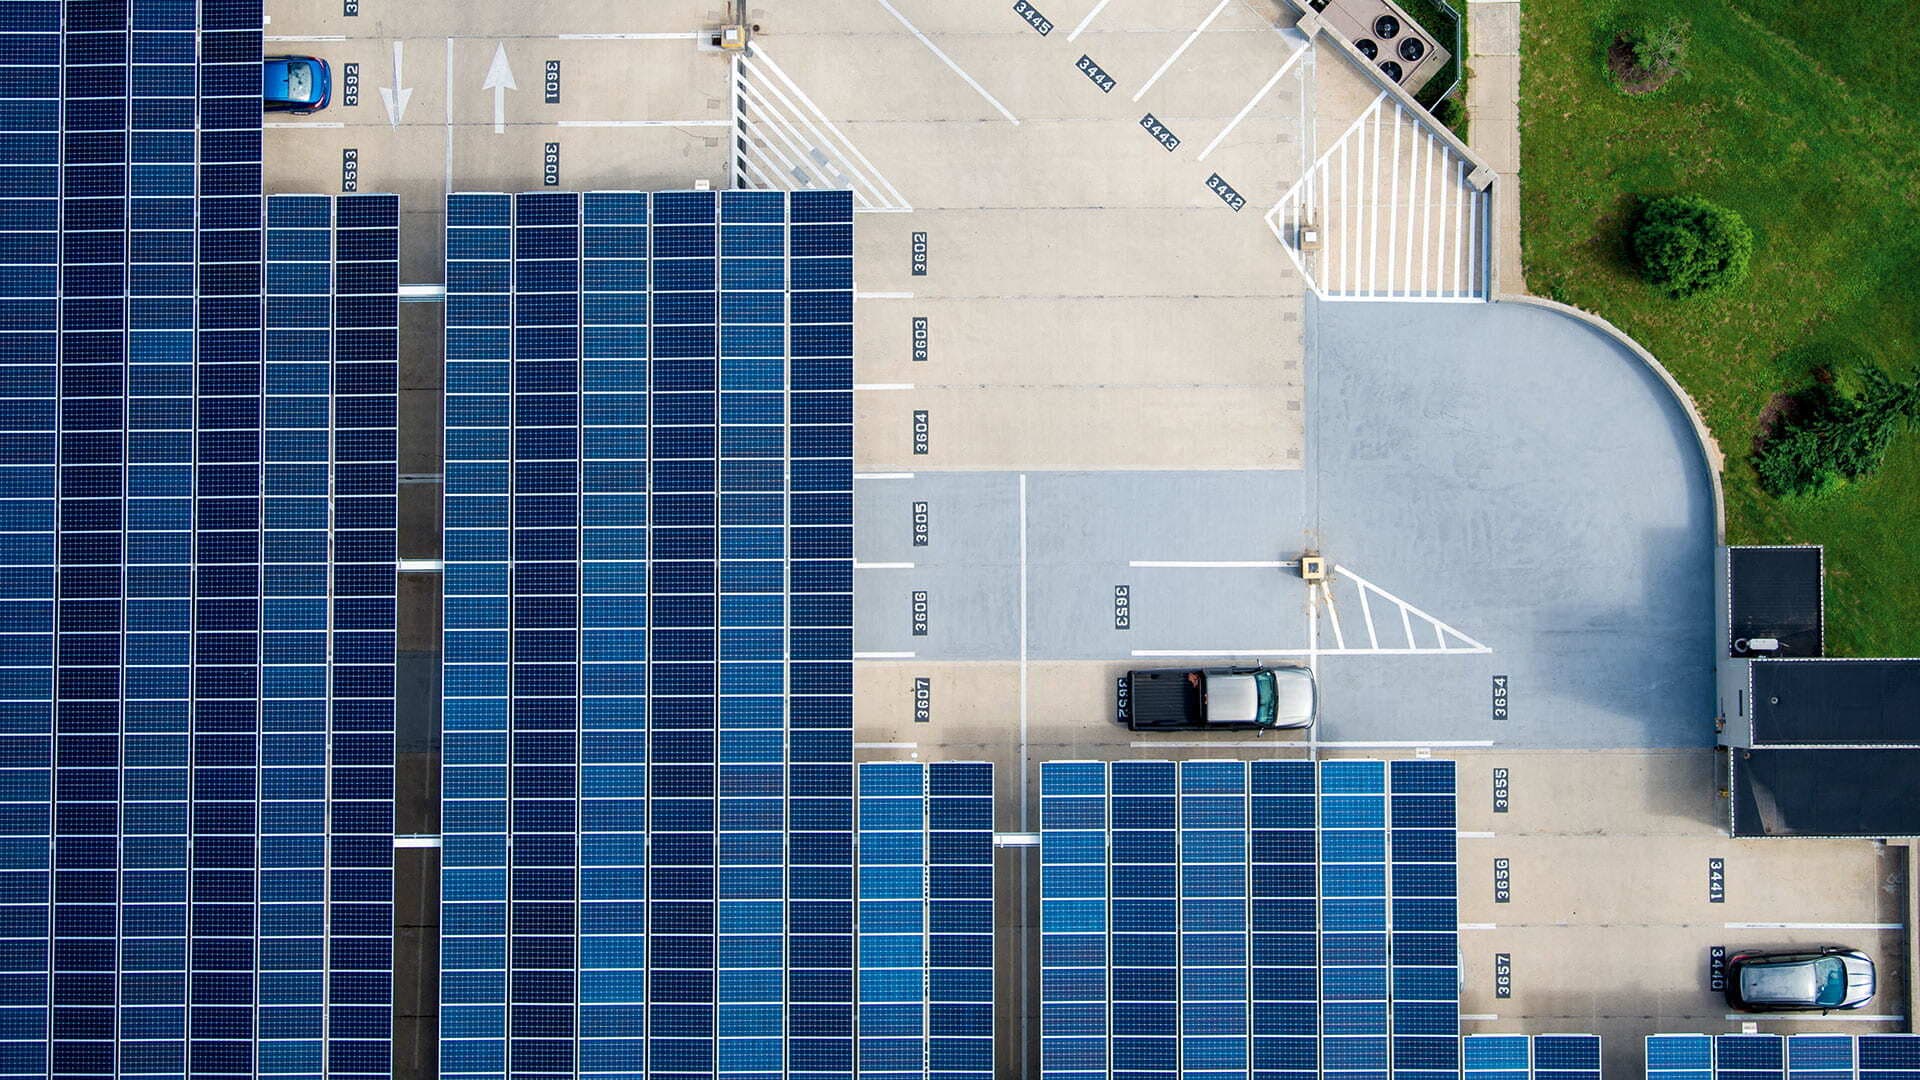 Solar panels on Regents Drive Garage